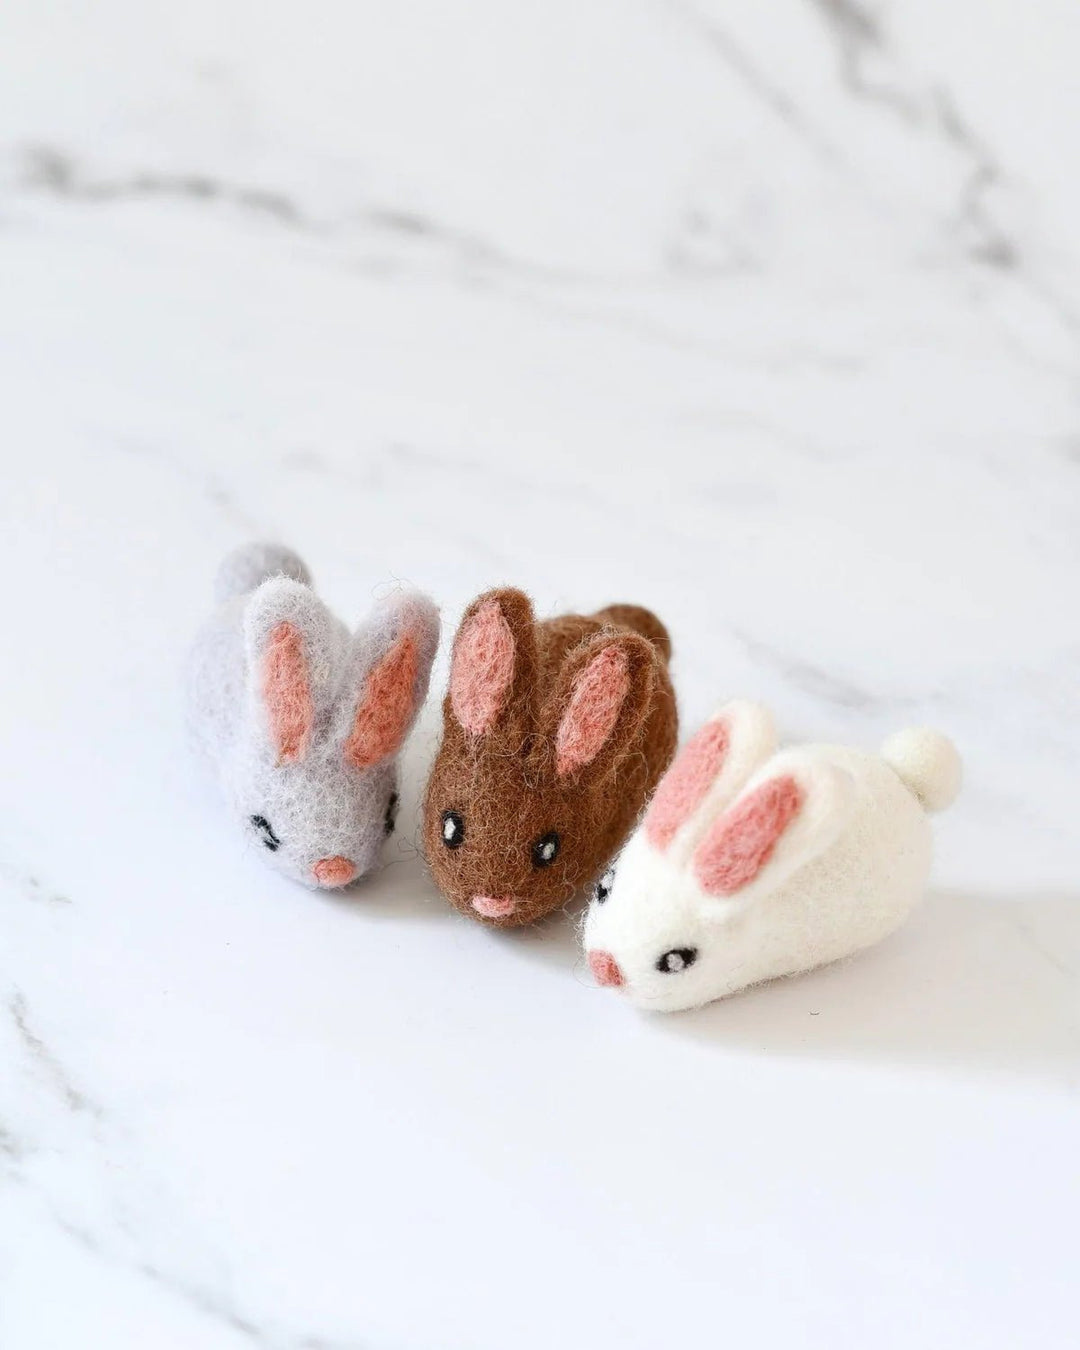 Tara Treasures Felt Rabbits - 3 Rabbits - #HolaNanu#NDIS #creativekids